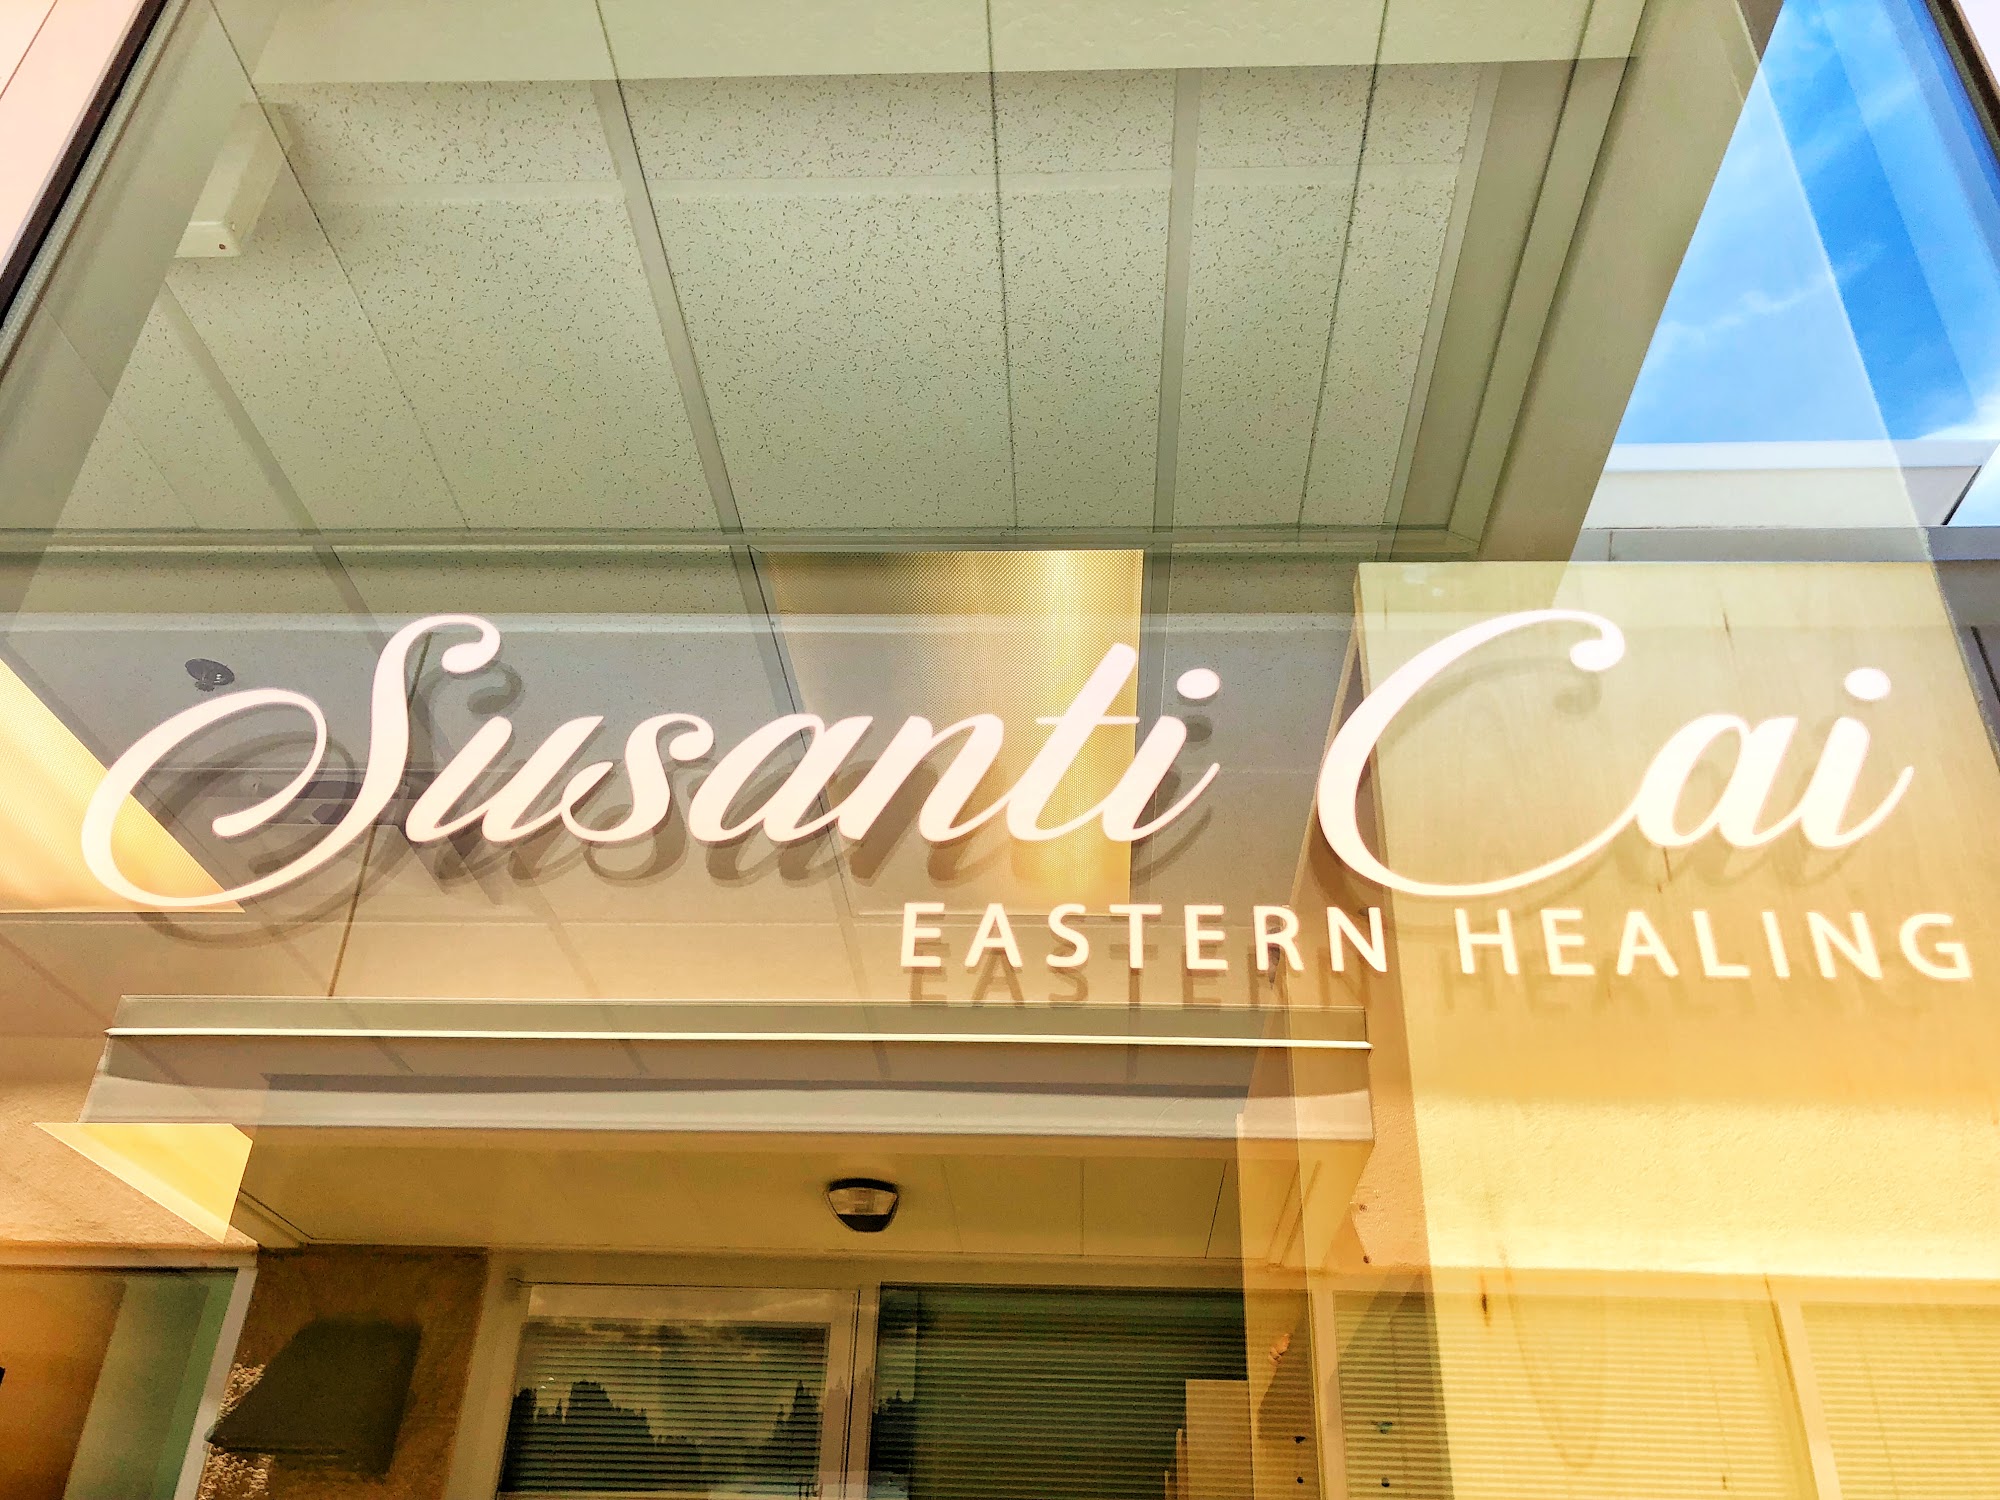 Susanti Cai Eastern Healing